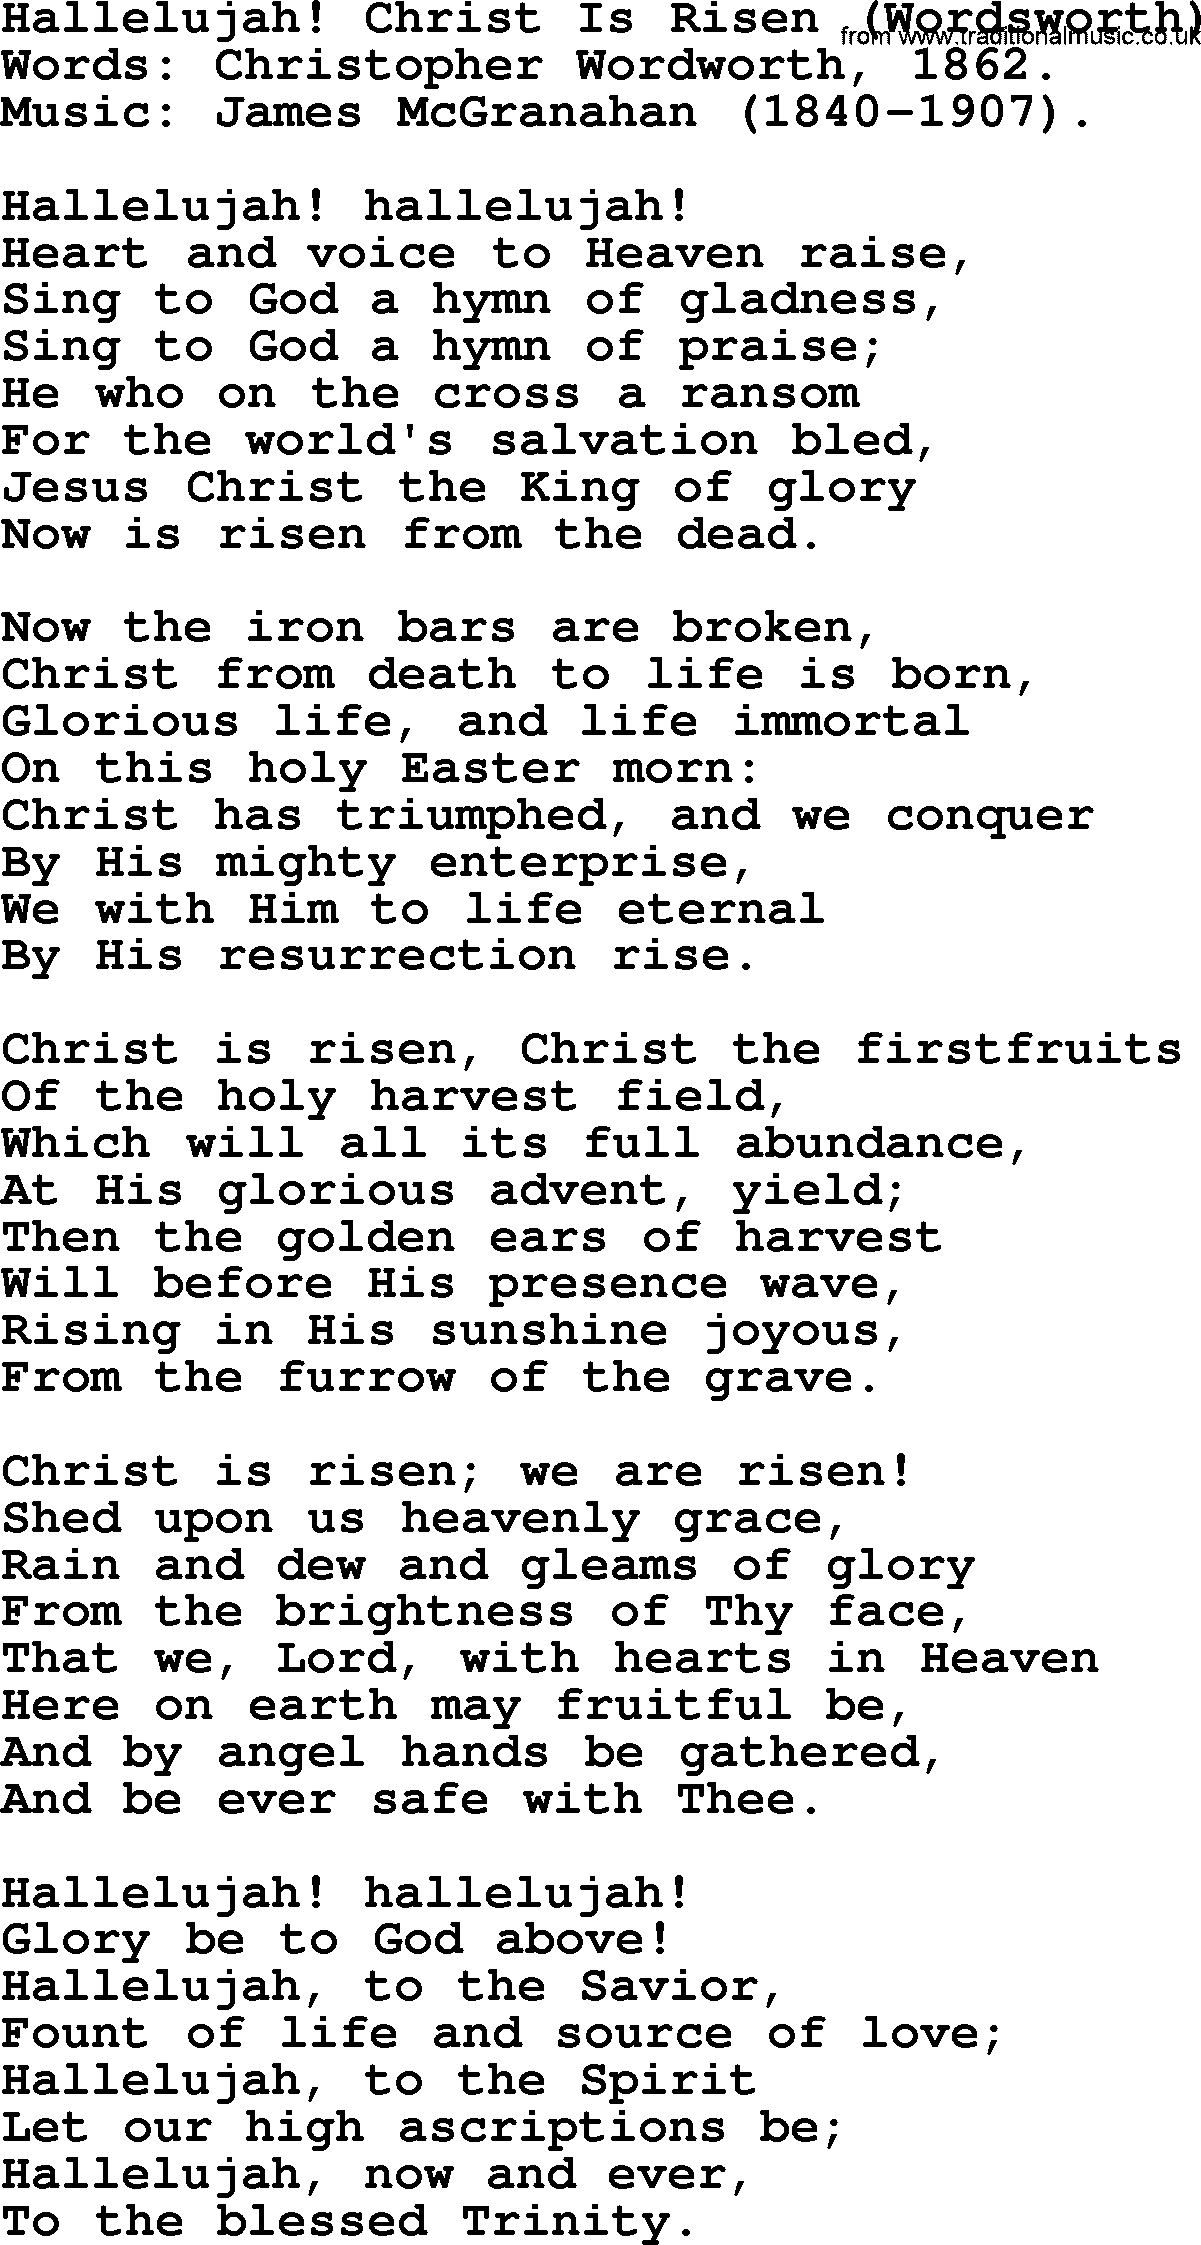 Easter Hymns, Song Hallelujah! Christ Is Risen (wordsworth) lyrics